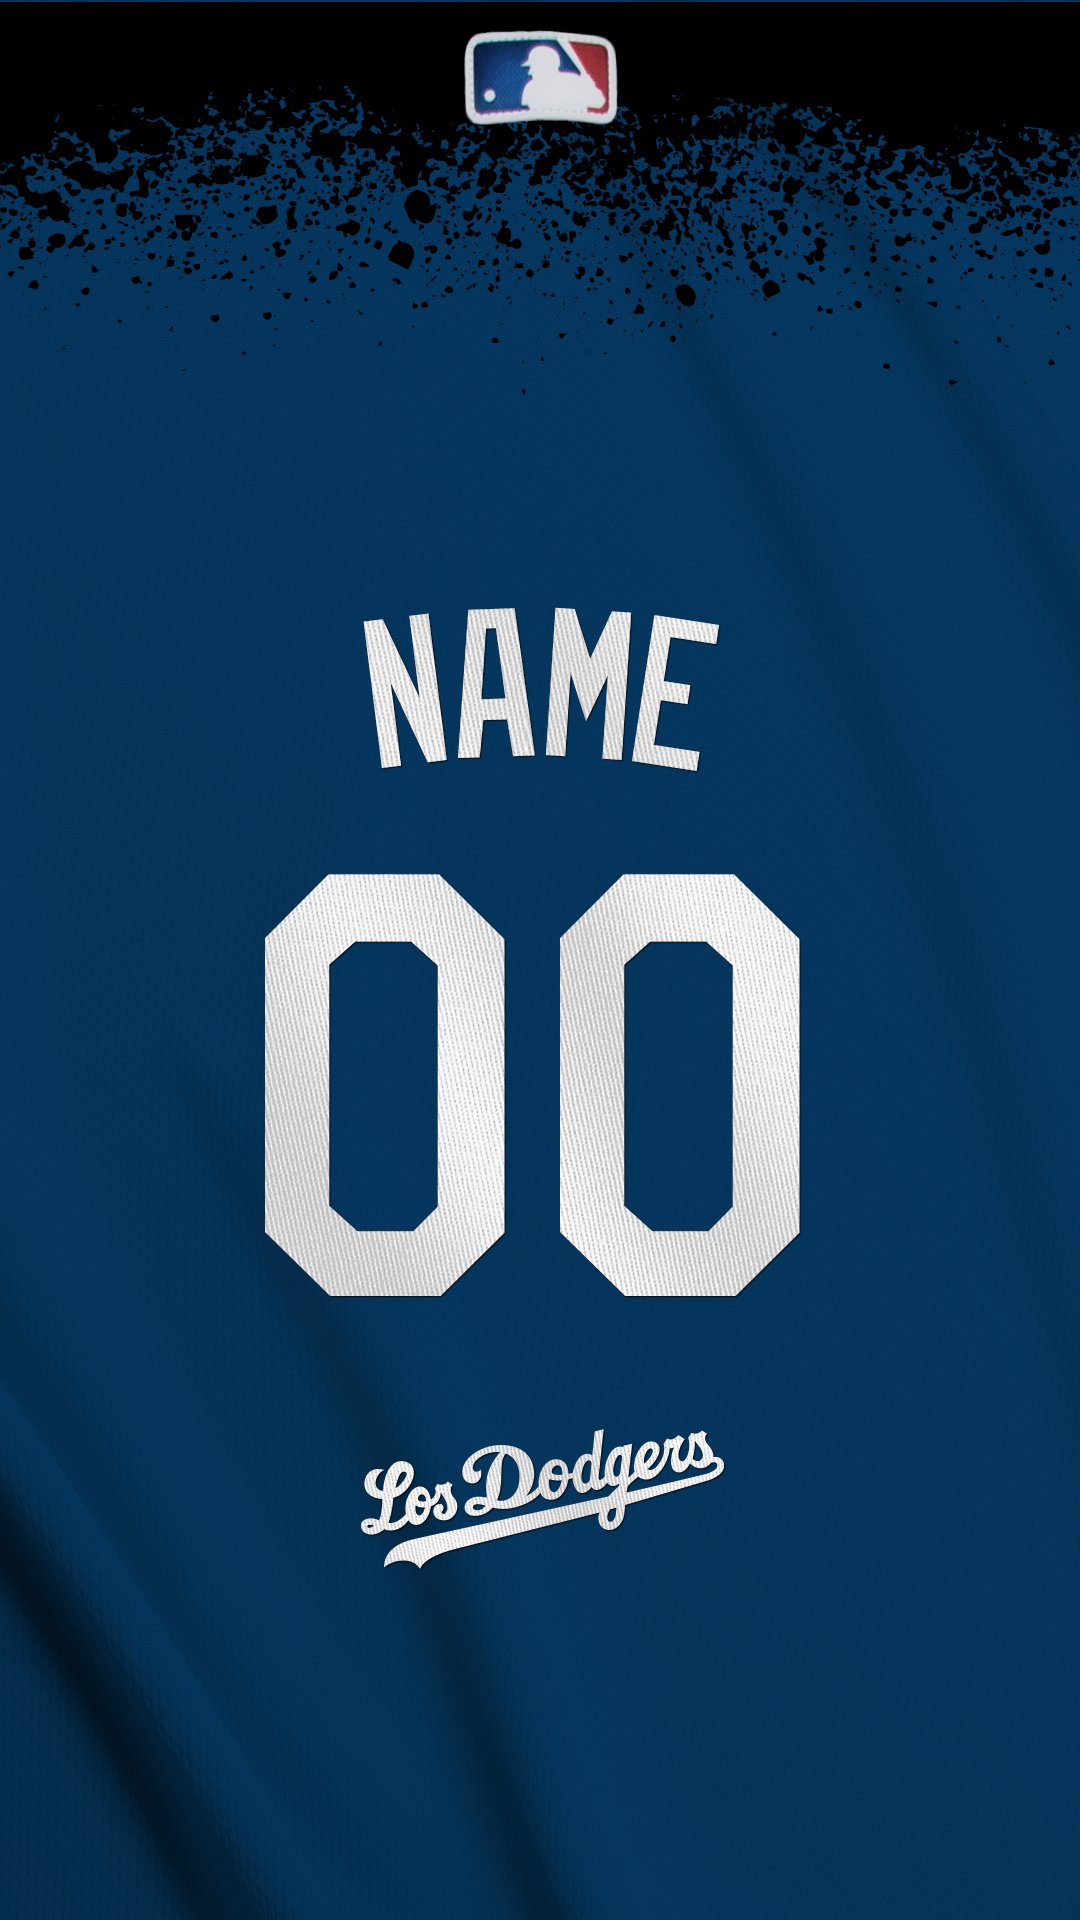 Los Angeles Dodgers wallpaper 2 by hawthorne85 on DeviantArt